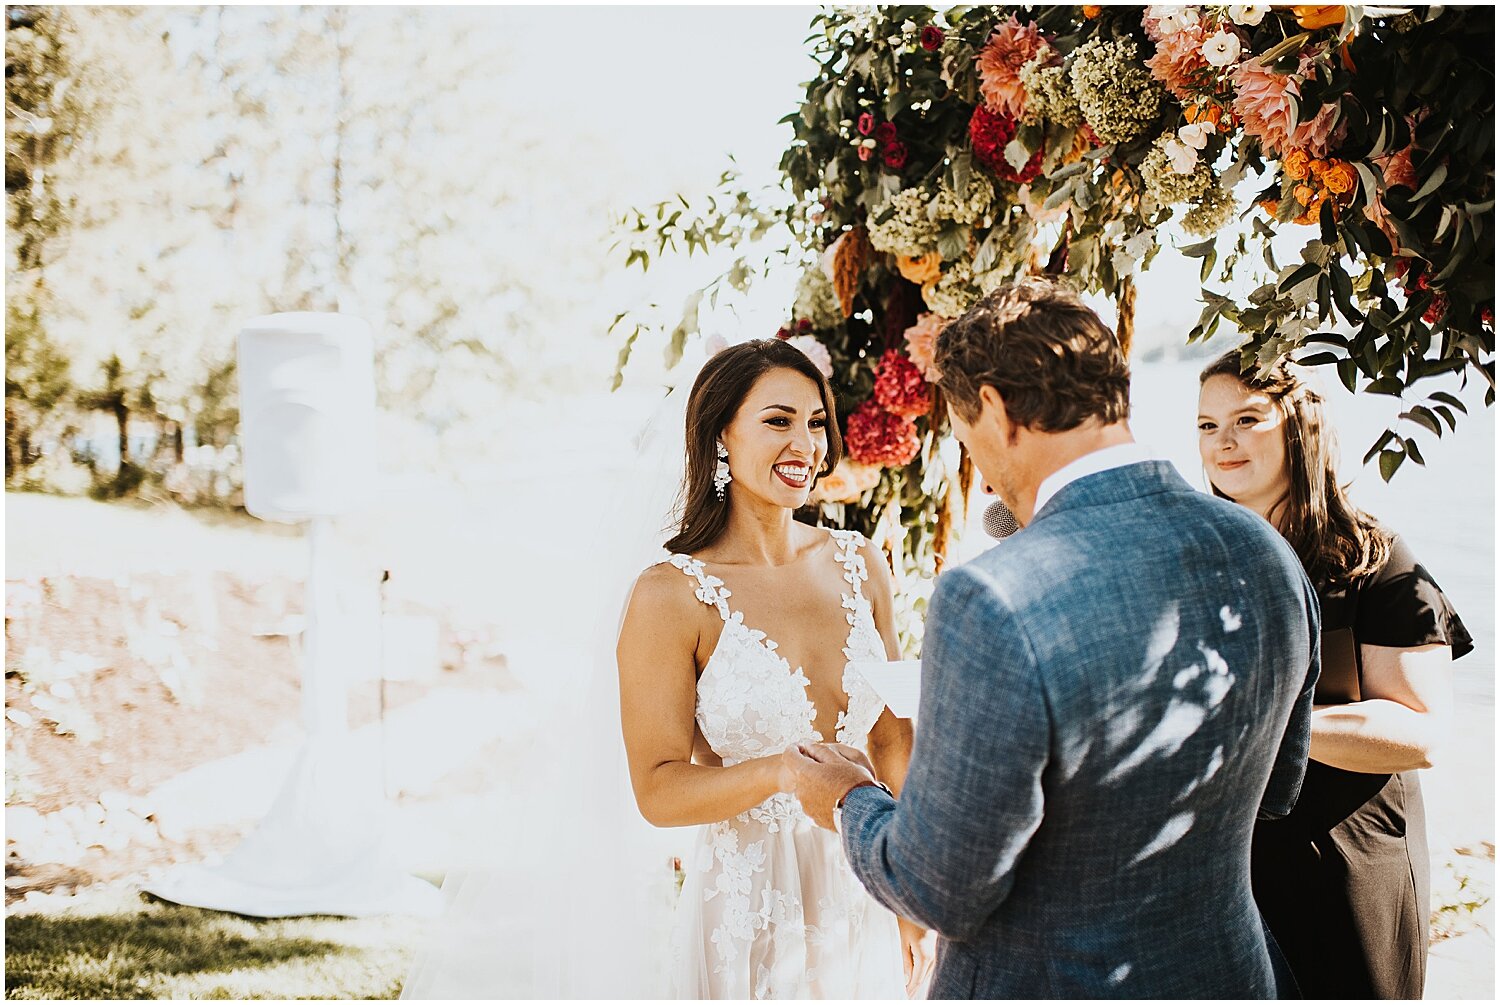 Tobin + Emily's Manhattan Beach Lodge Wedding — Rosetree Events